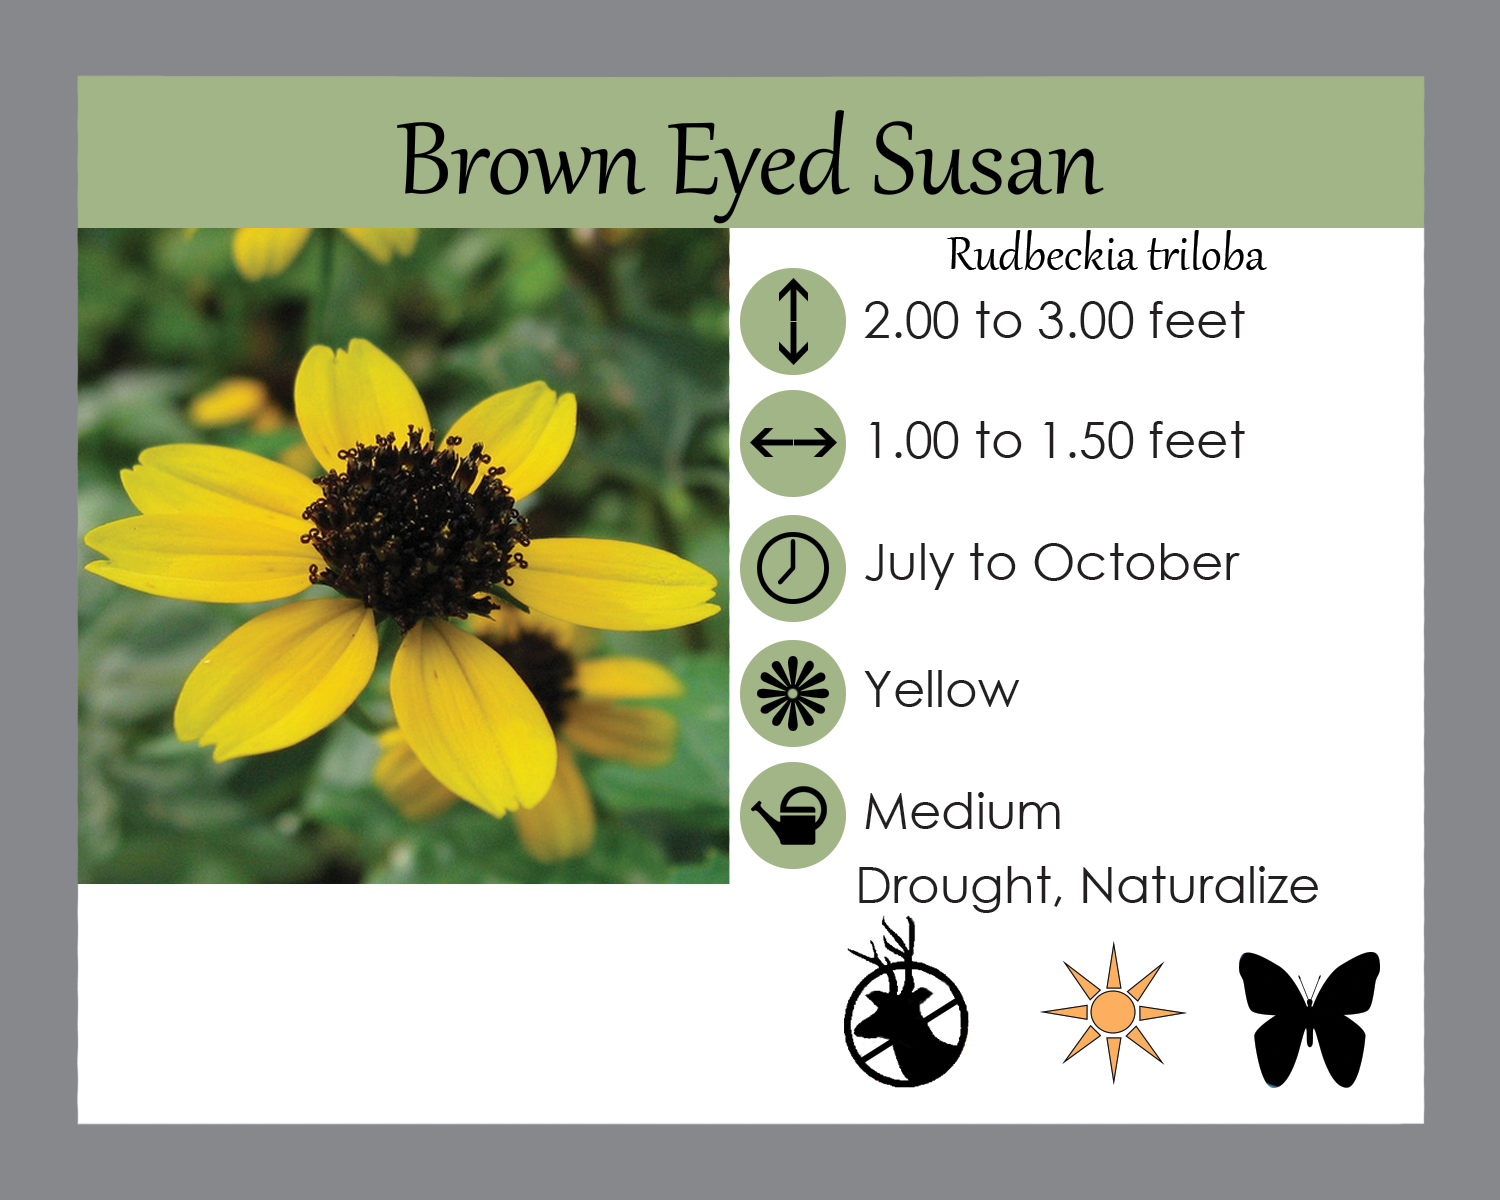 Rudbeckia triloba Brown Eyed Susan